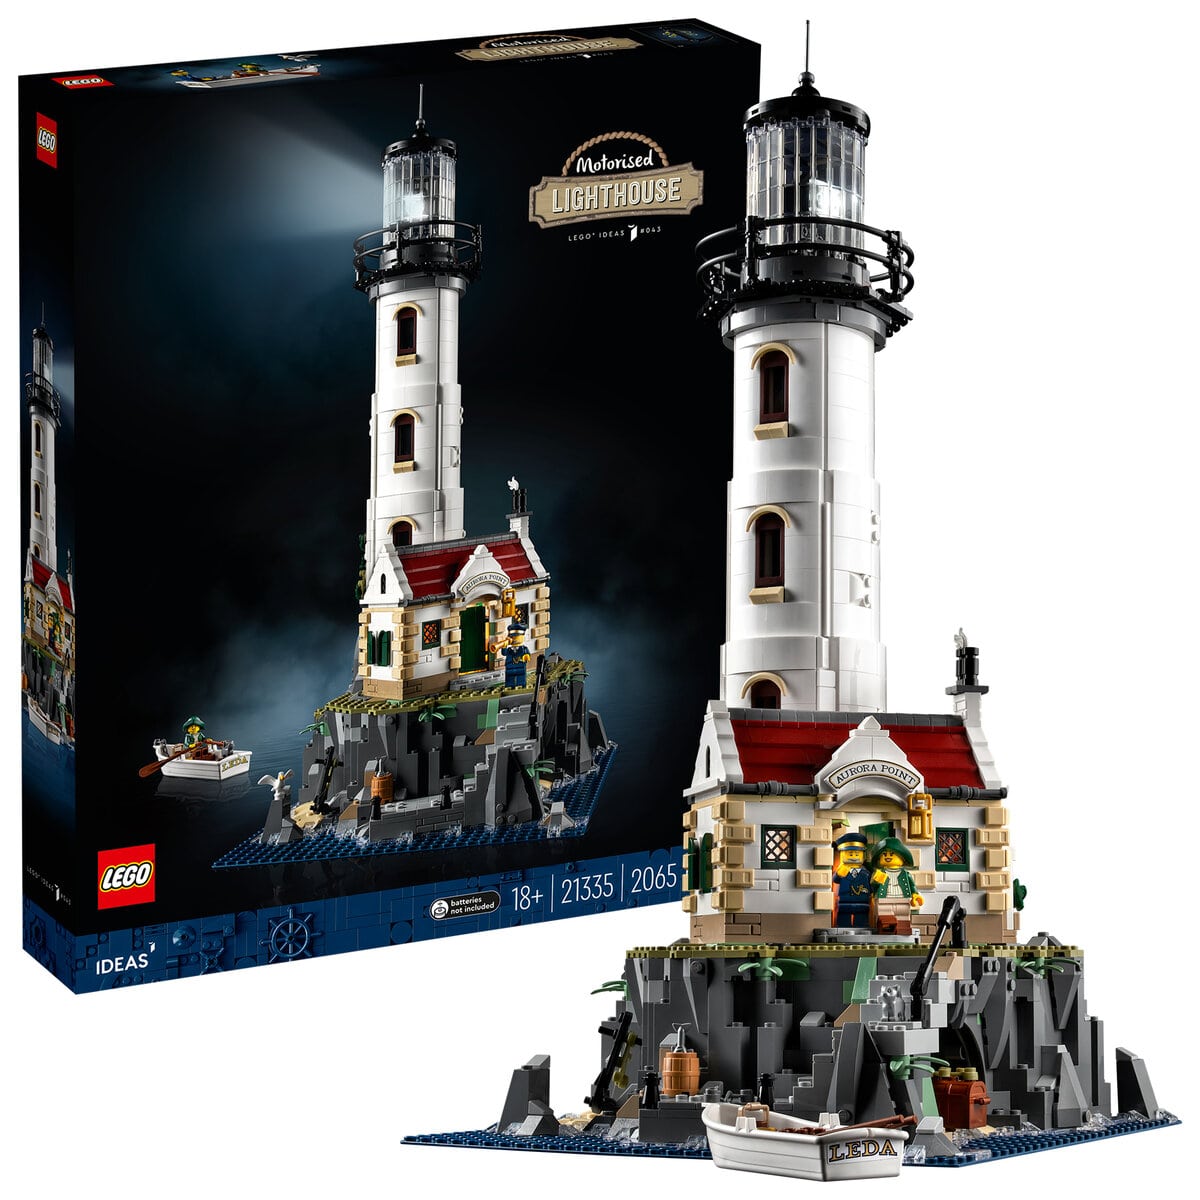 LEGO Ideas : au tour du projet The Lighthouse (Le Phare) - HelloBricks